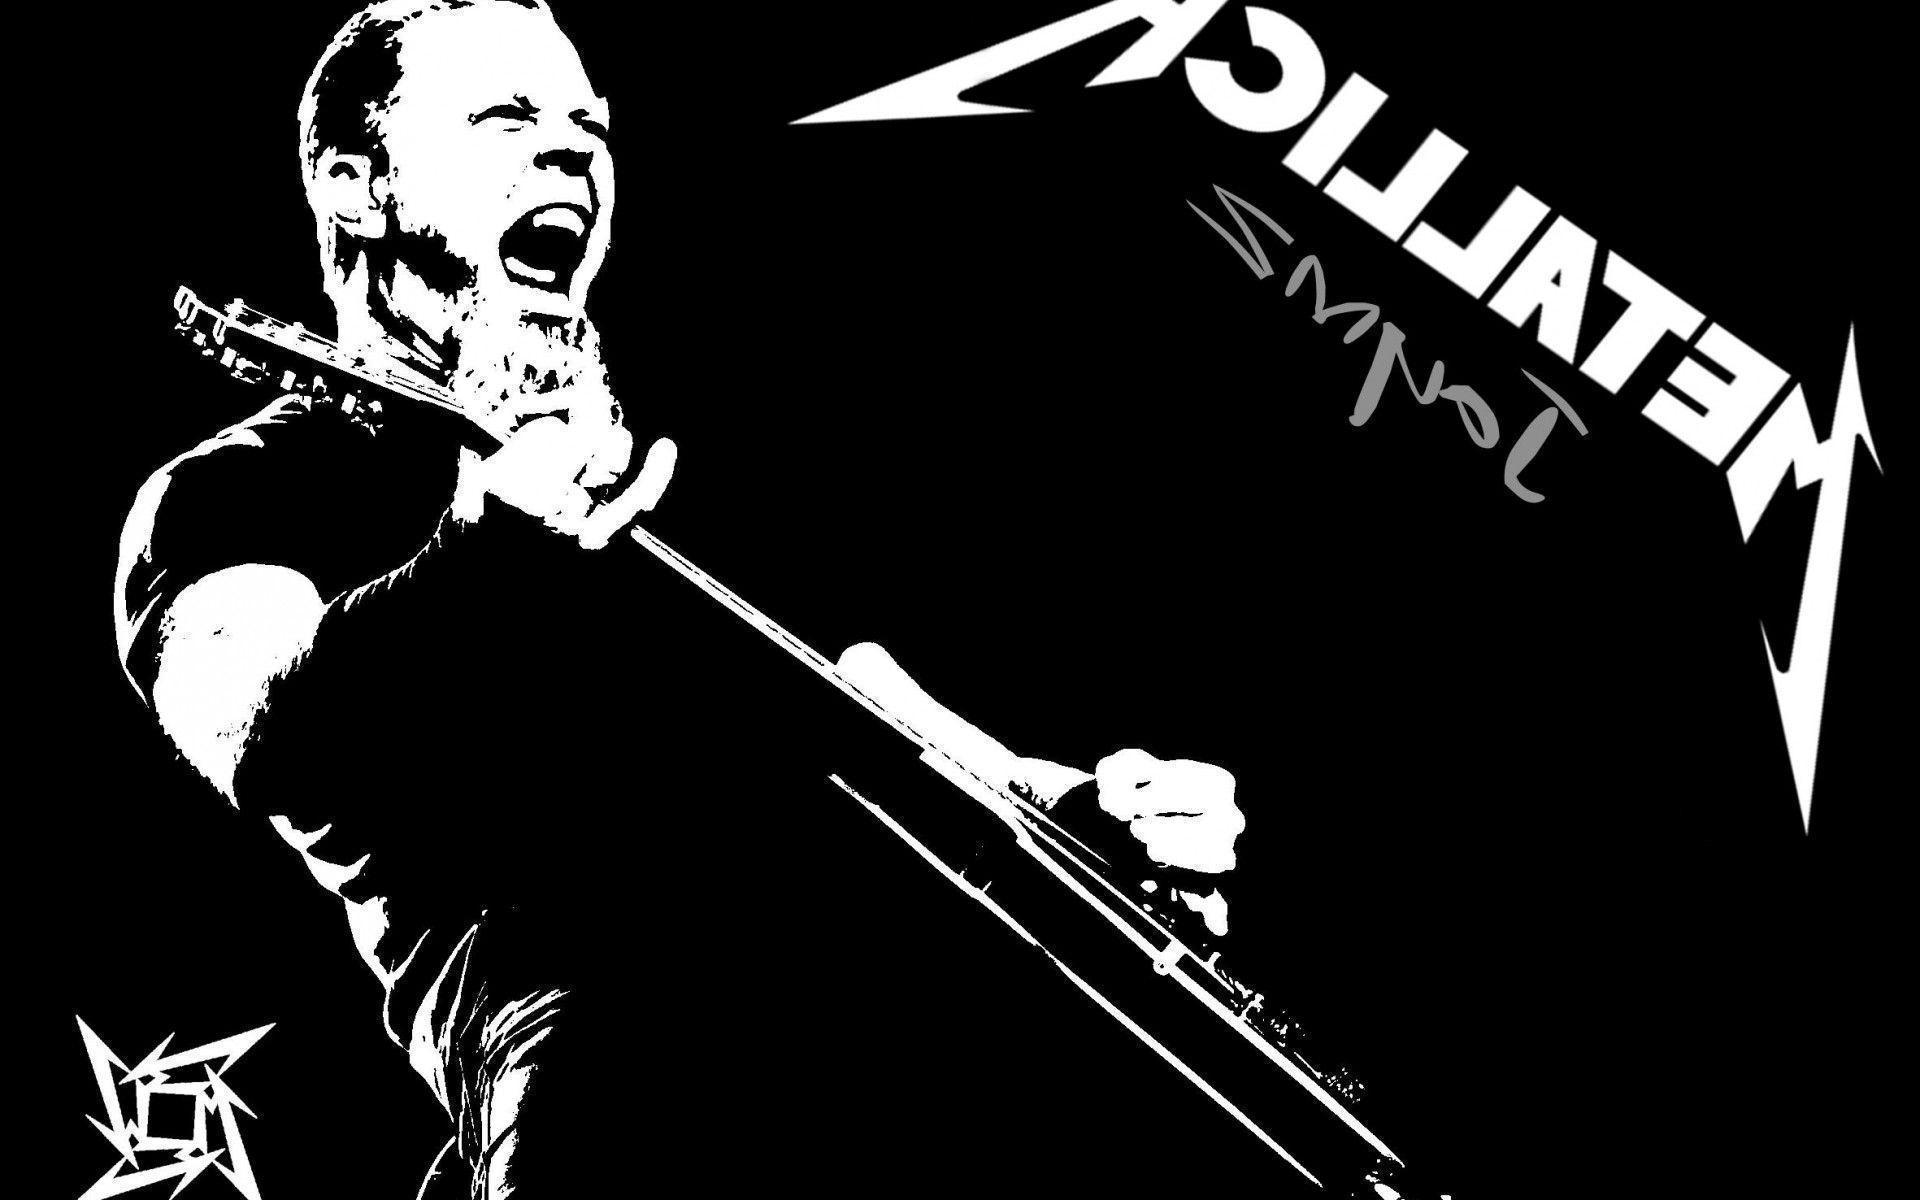 Metallica wallpaper